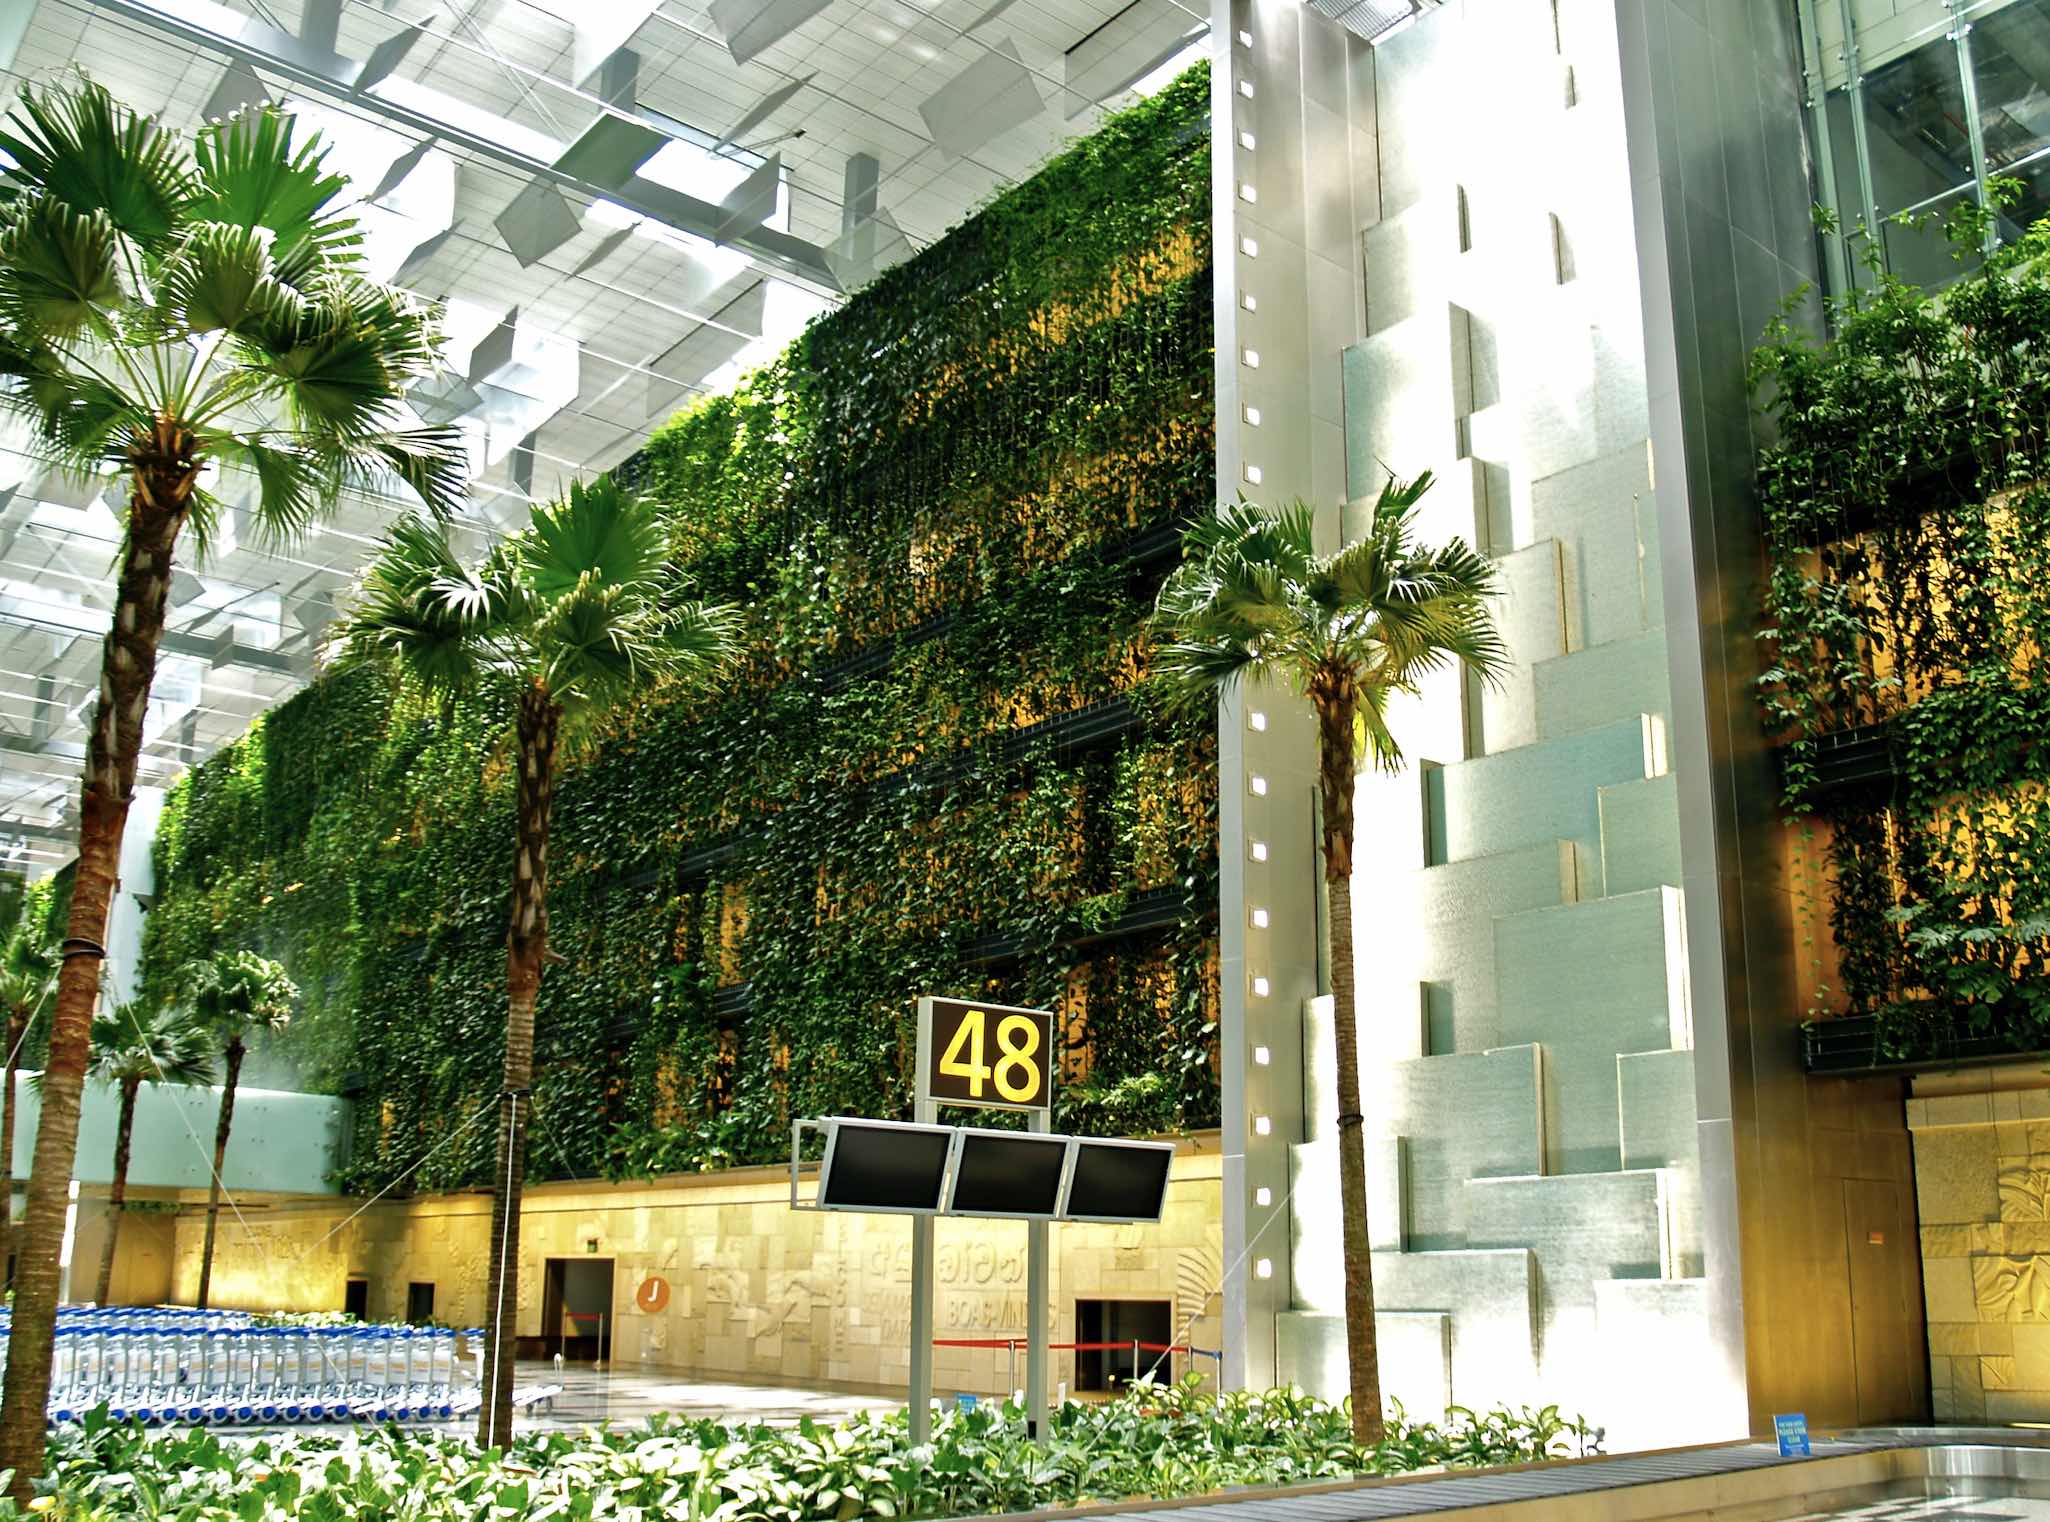 Architectural - Changi Airport Terminal 3 — TECHNOLITE